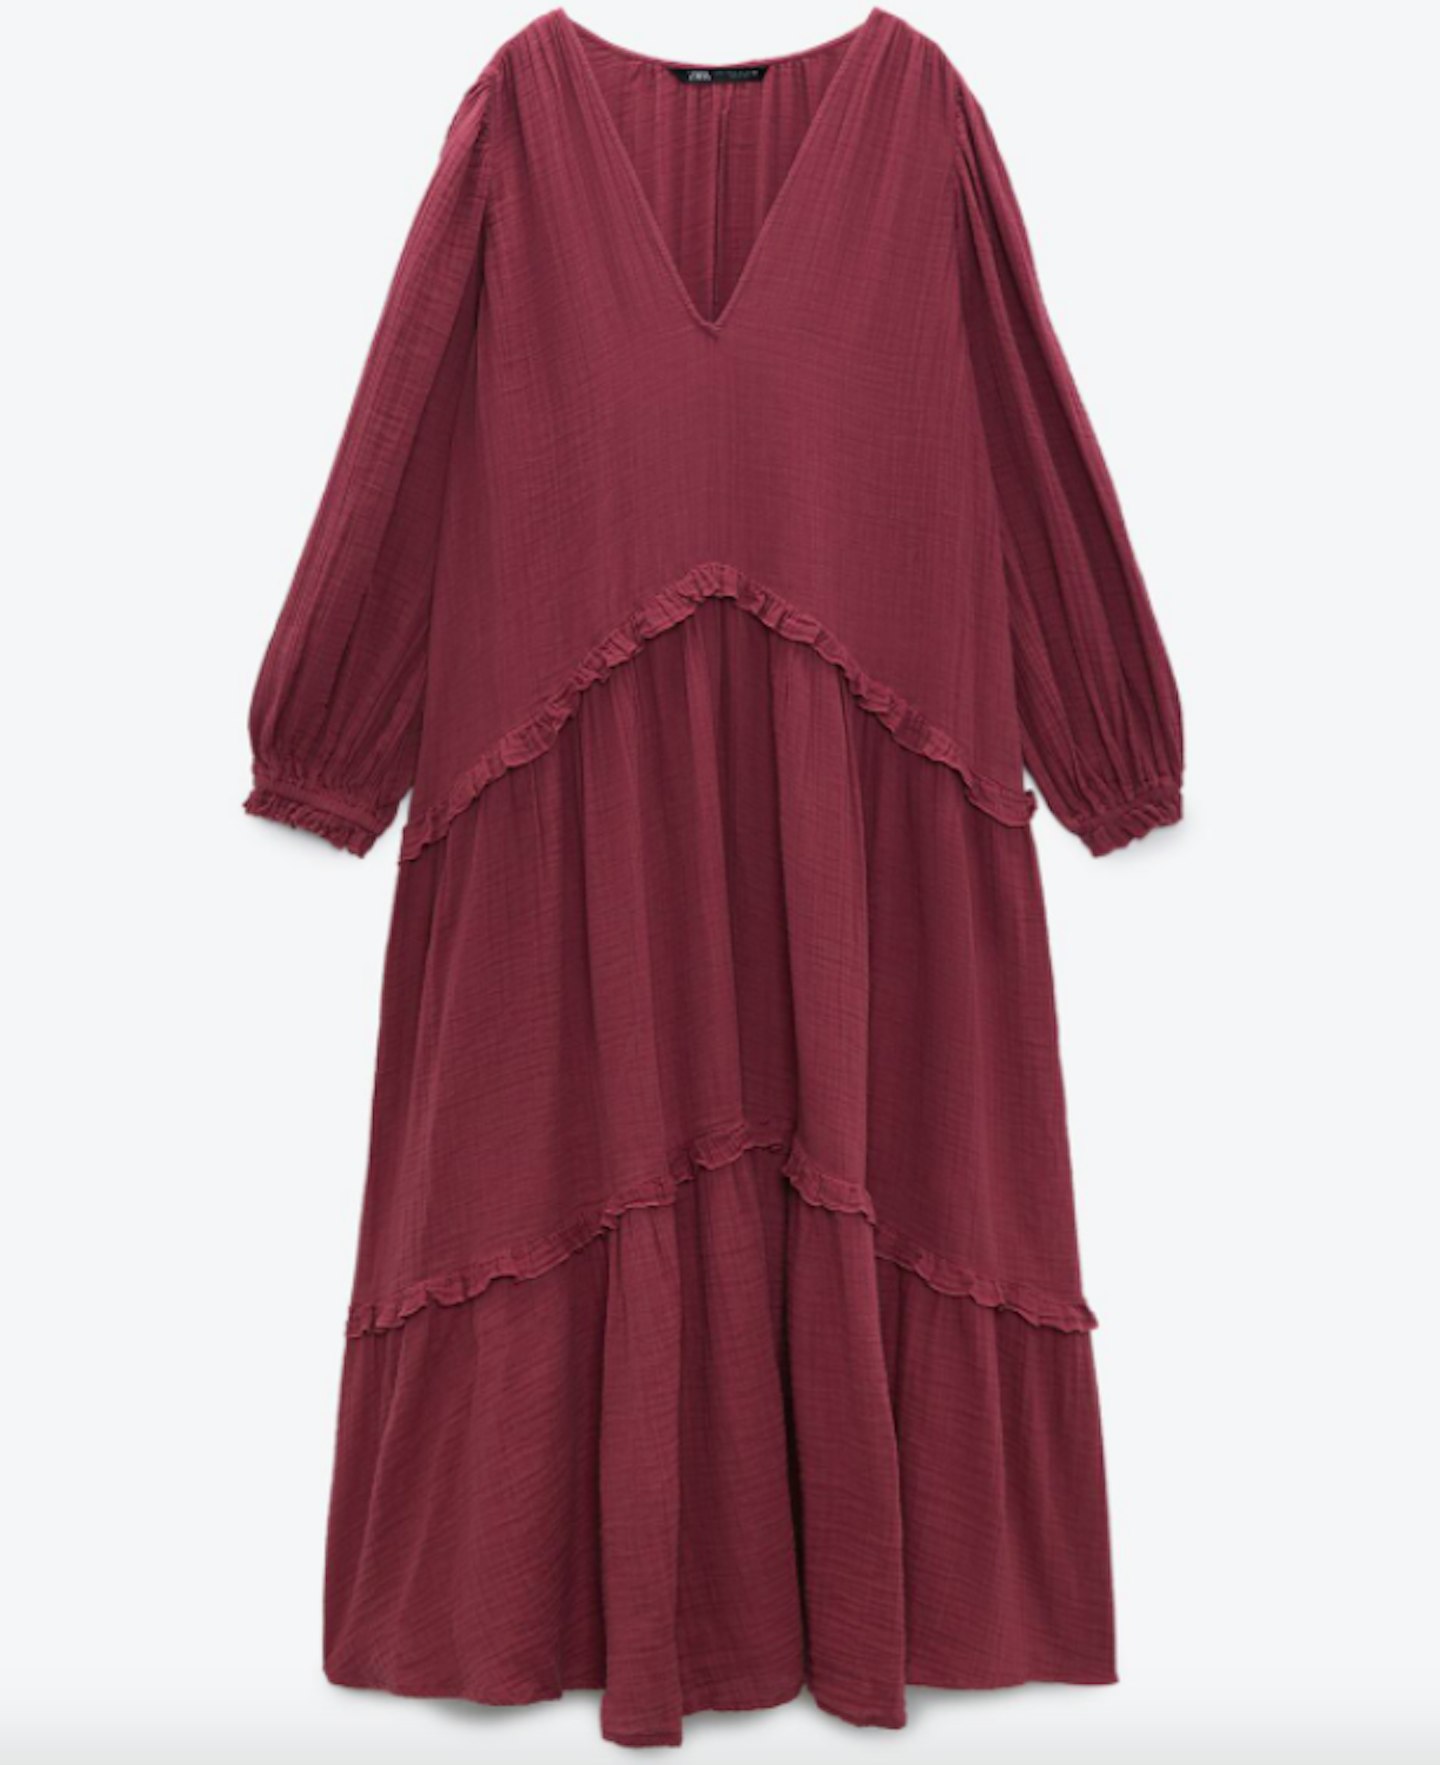 Zara, Panelled Dress, £49.99